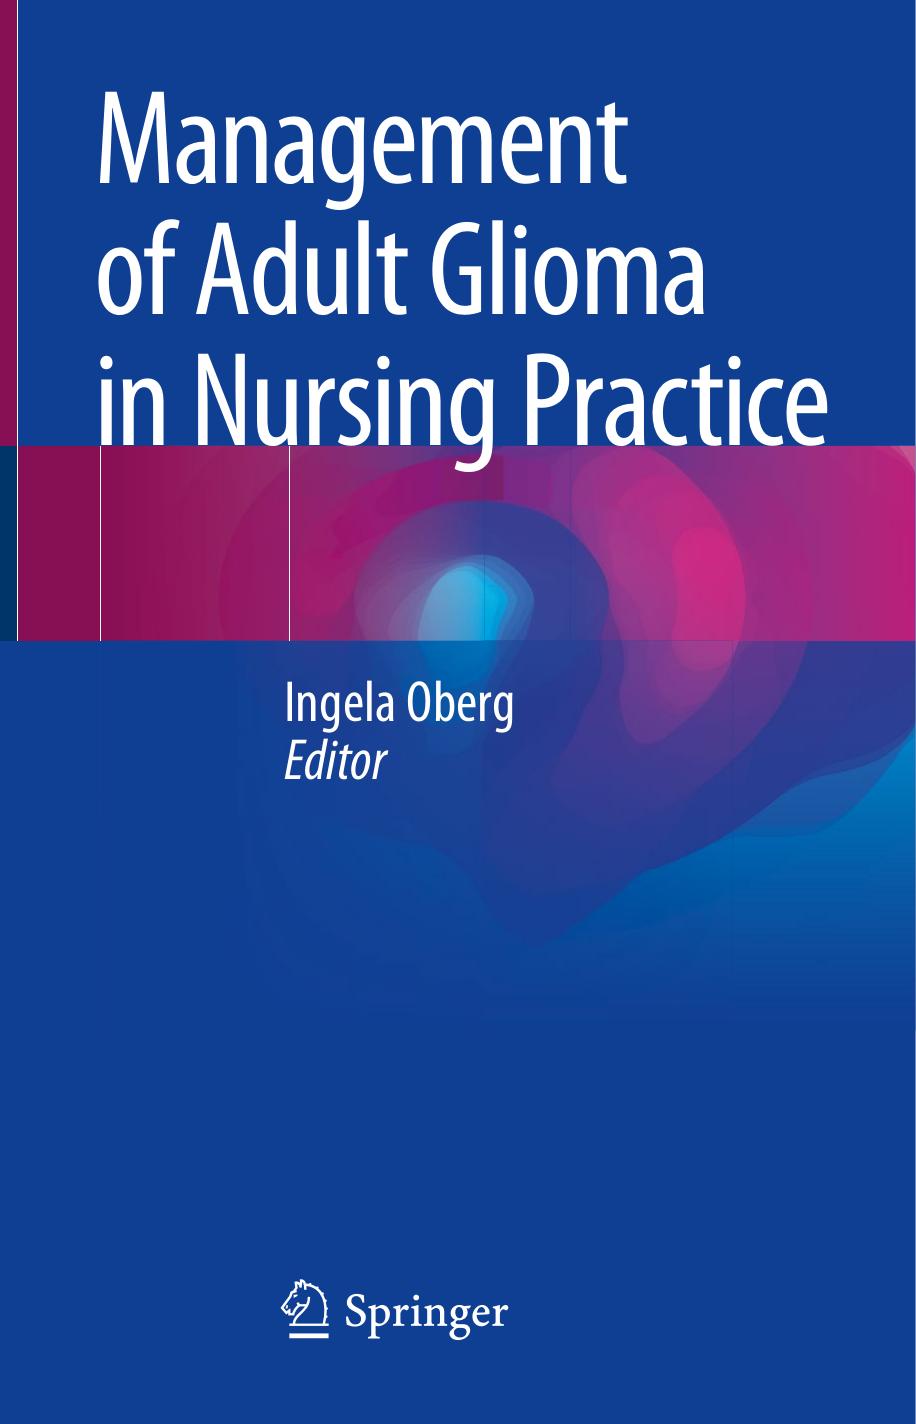 Management of Adult Glioma in Nursing Practice-Springer International Publishing (2020)